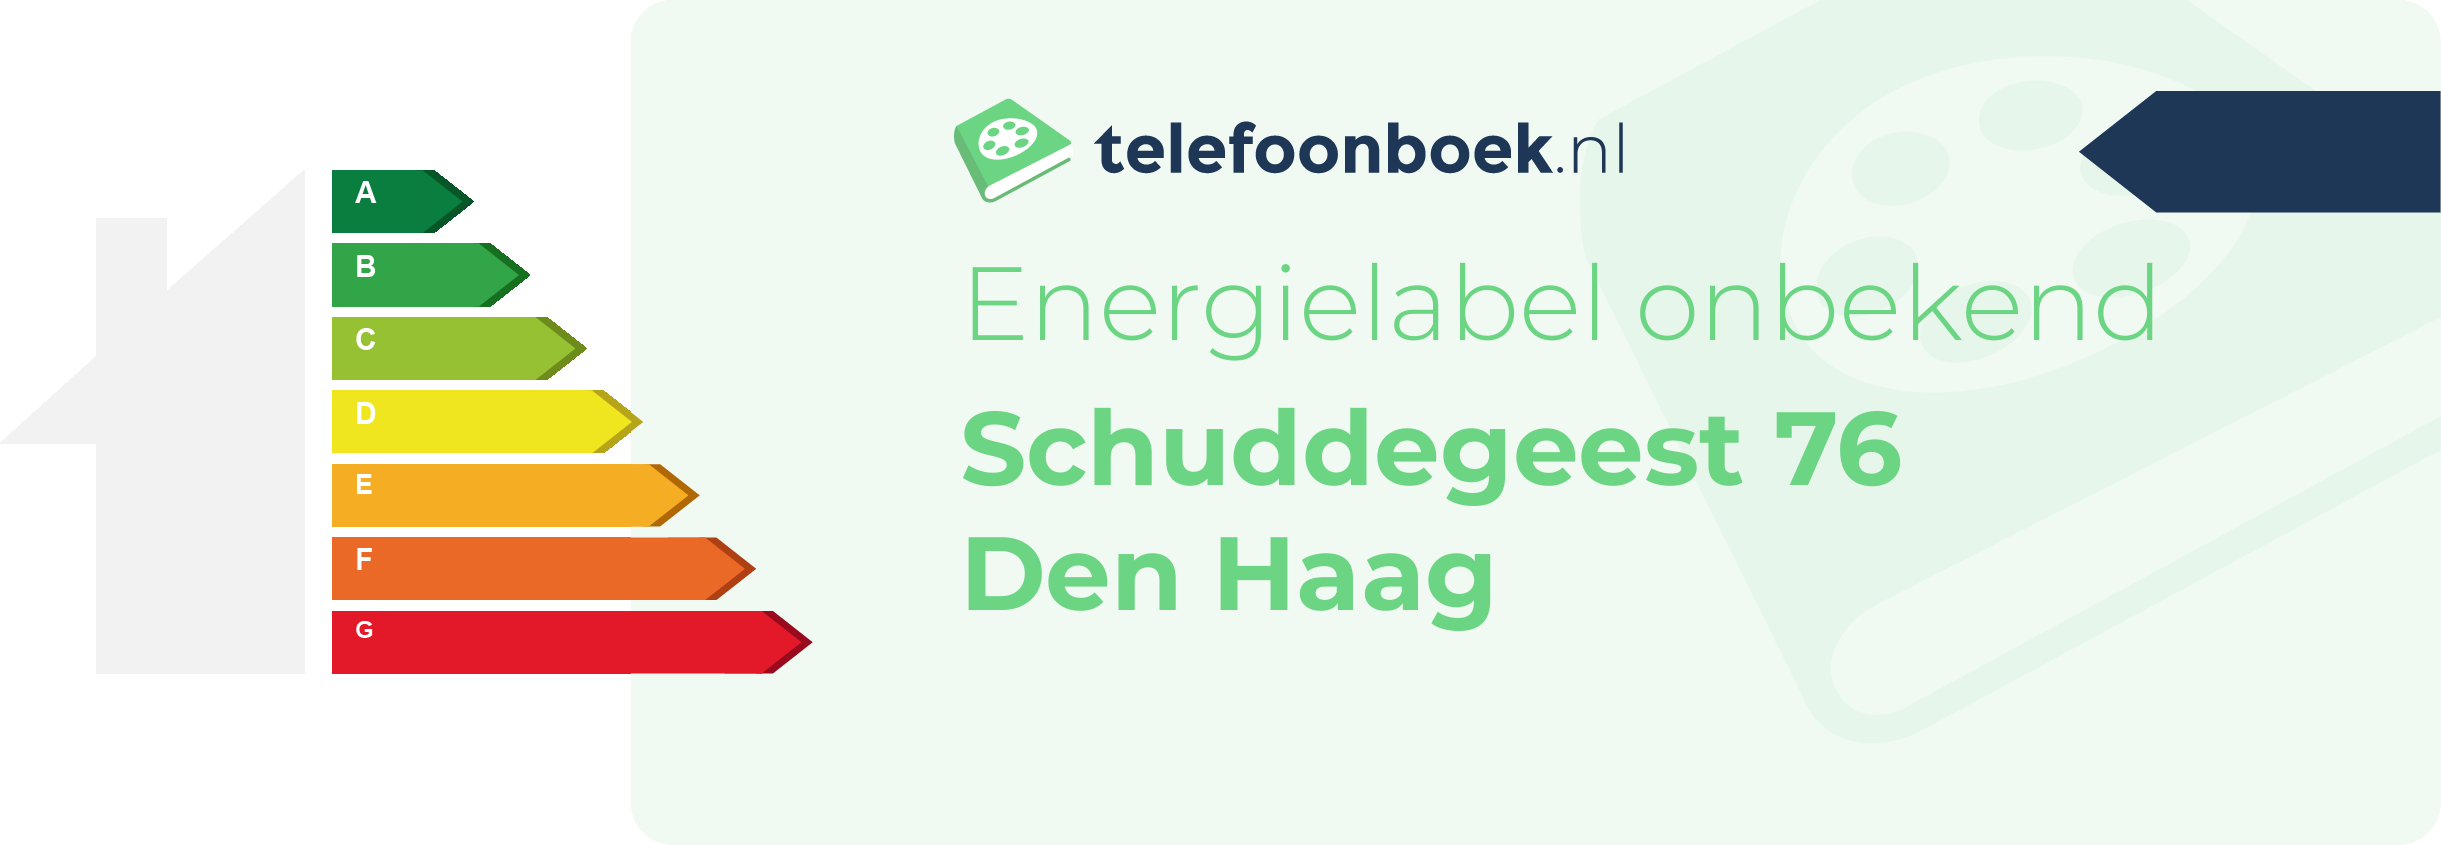 Energielabel Schuddegeest 76 Den Haag